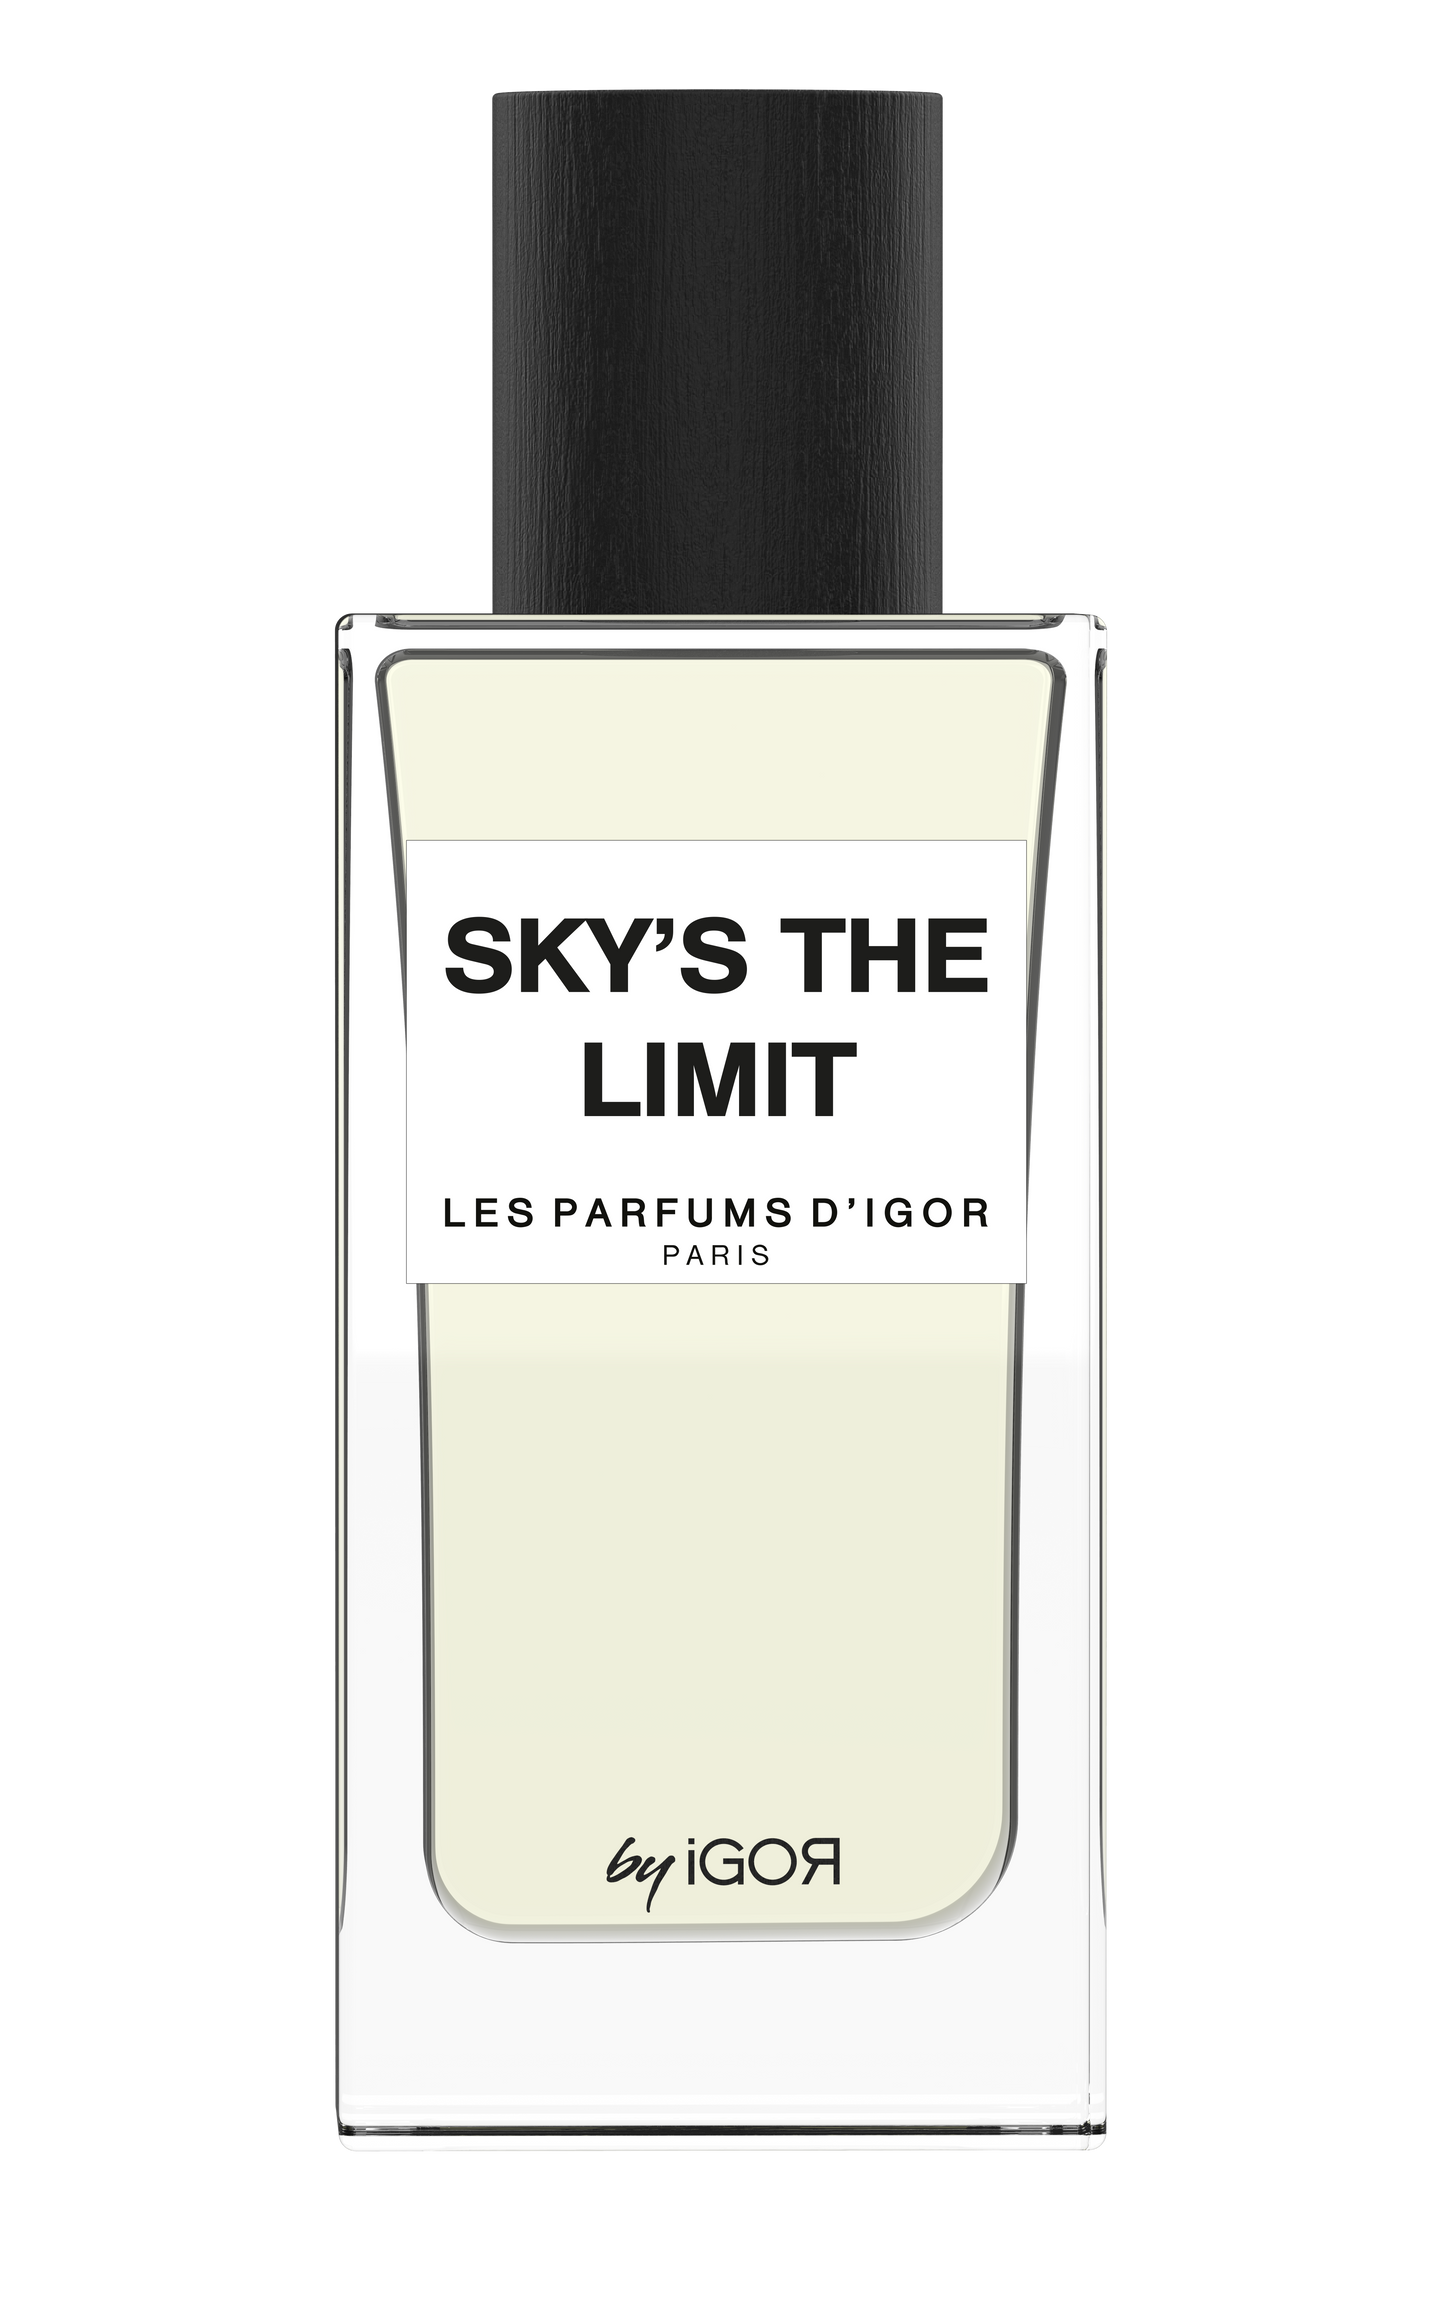 Sky’s The limit